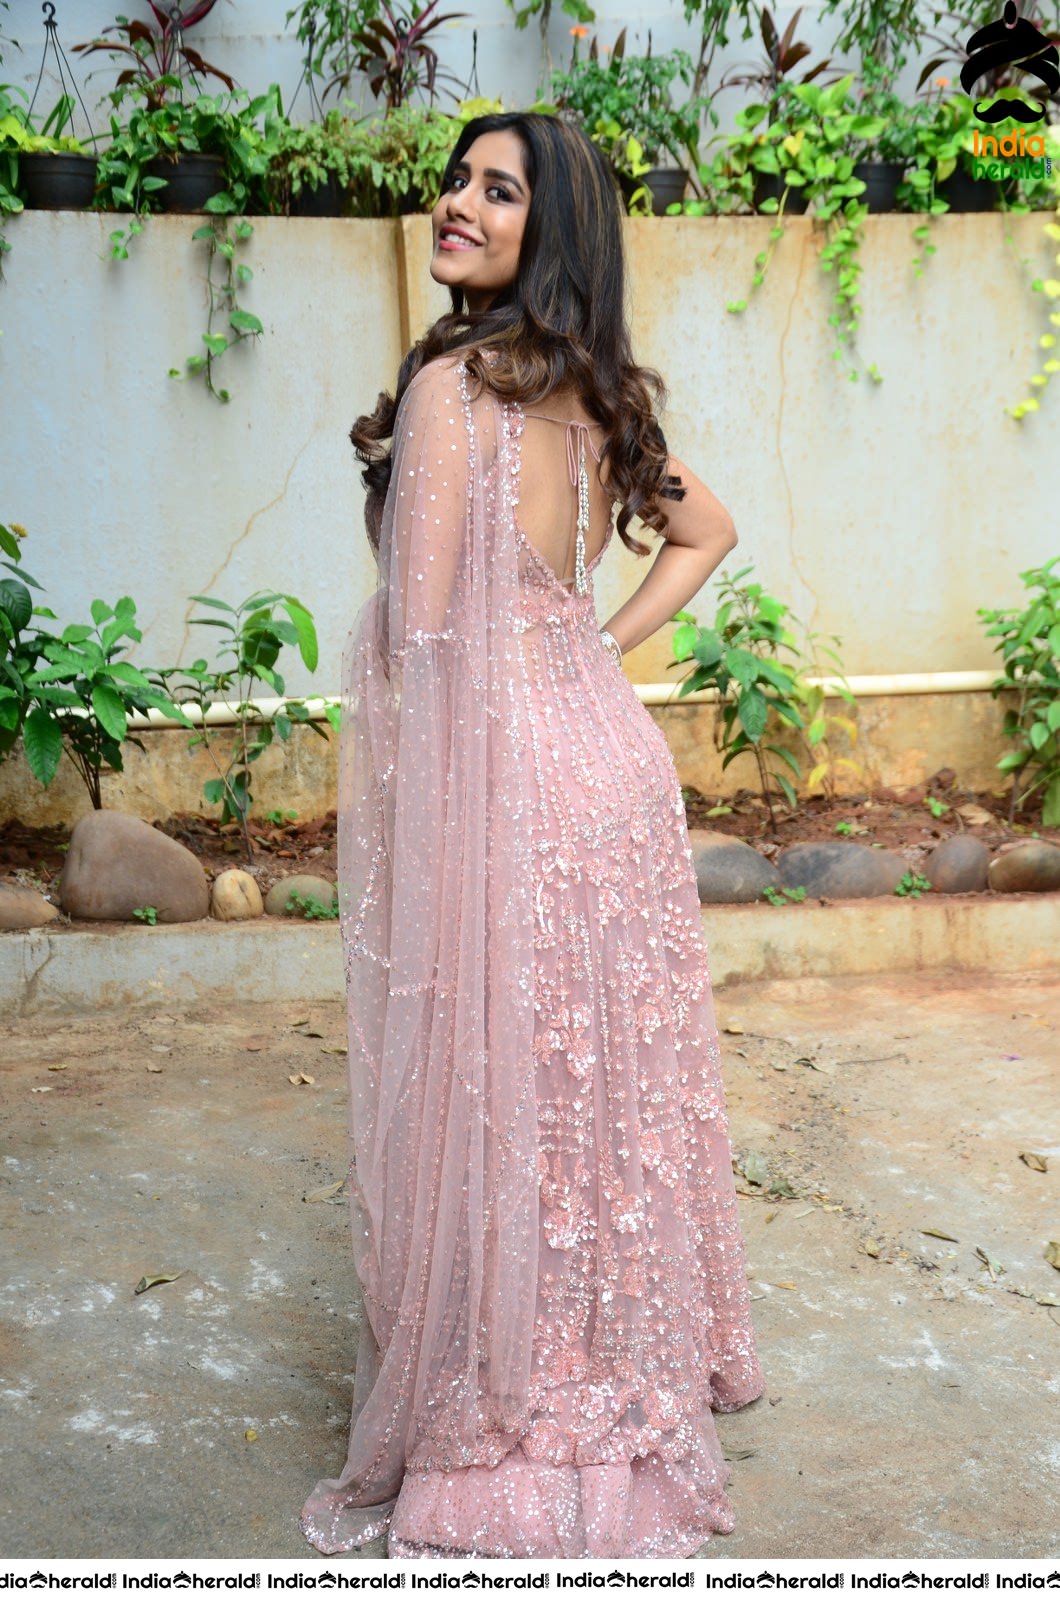 Nabha Natesh Looking So Gorgeous in Lehenga with Curled Hairs Set 2